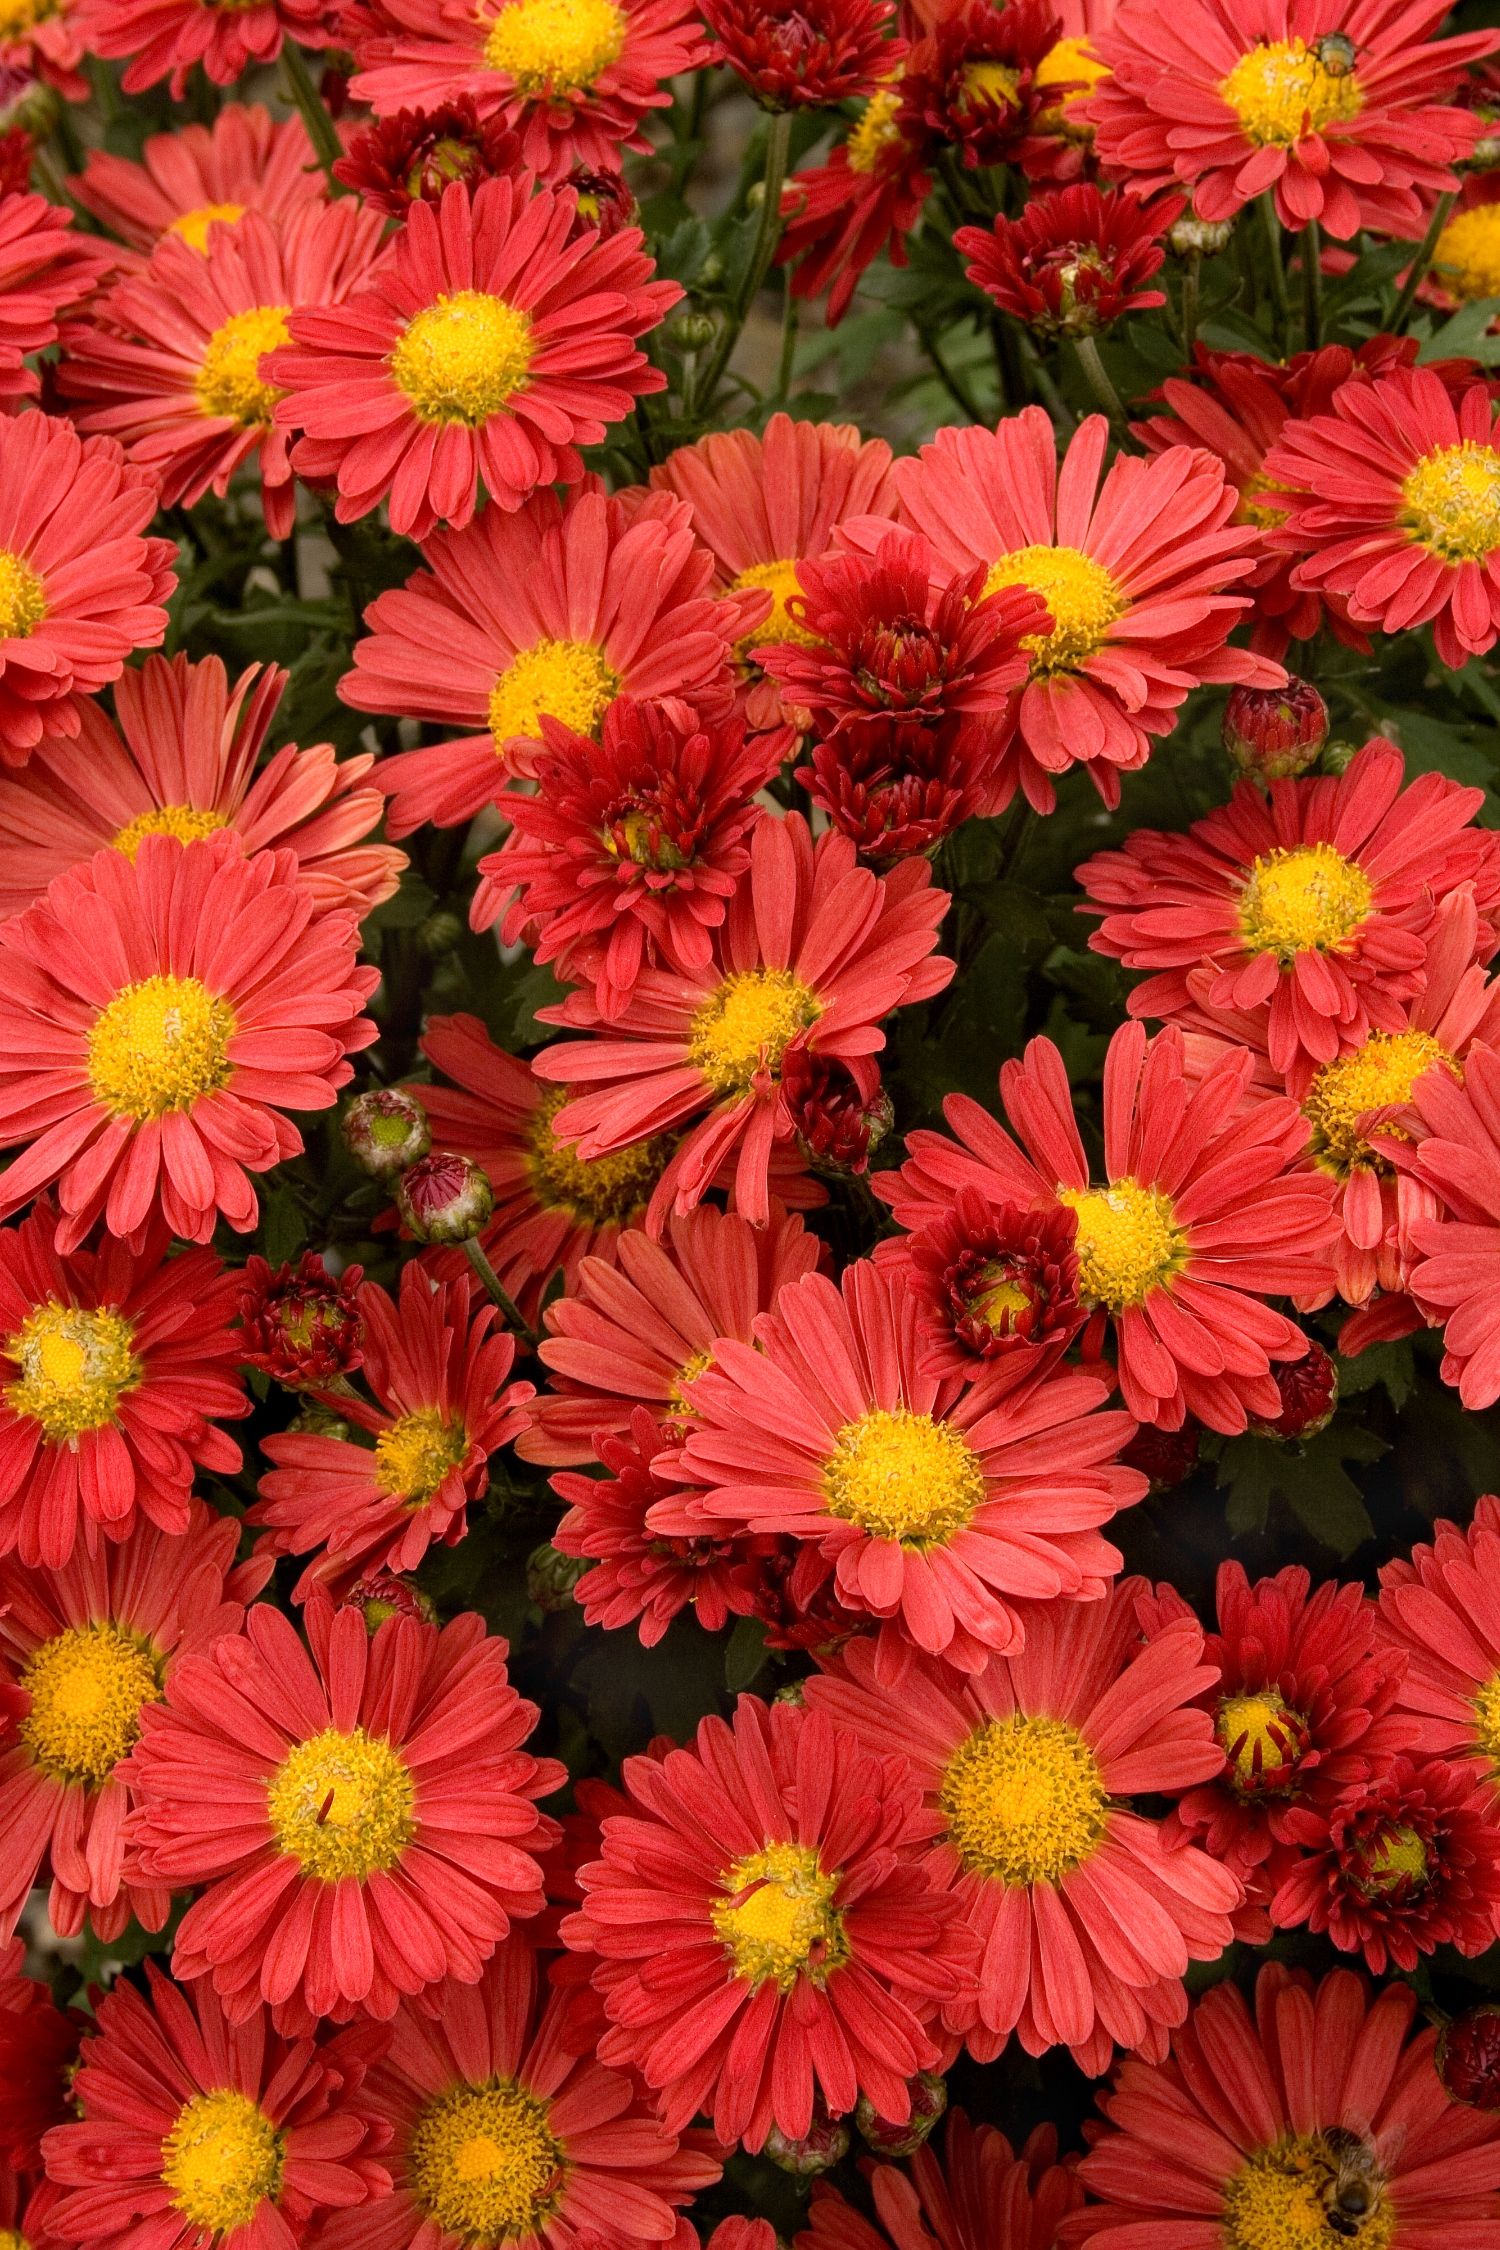 Red daisy garden mum. For fall color. | Kansas garden & flower bed ...